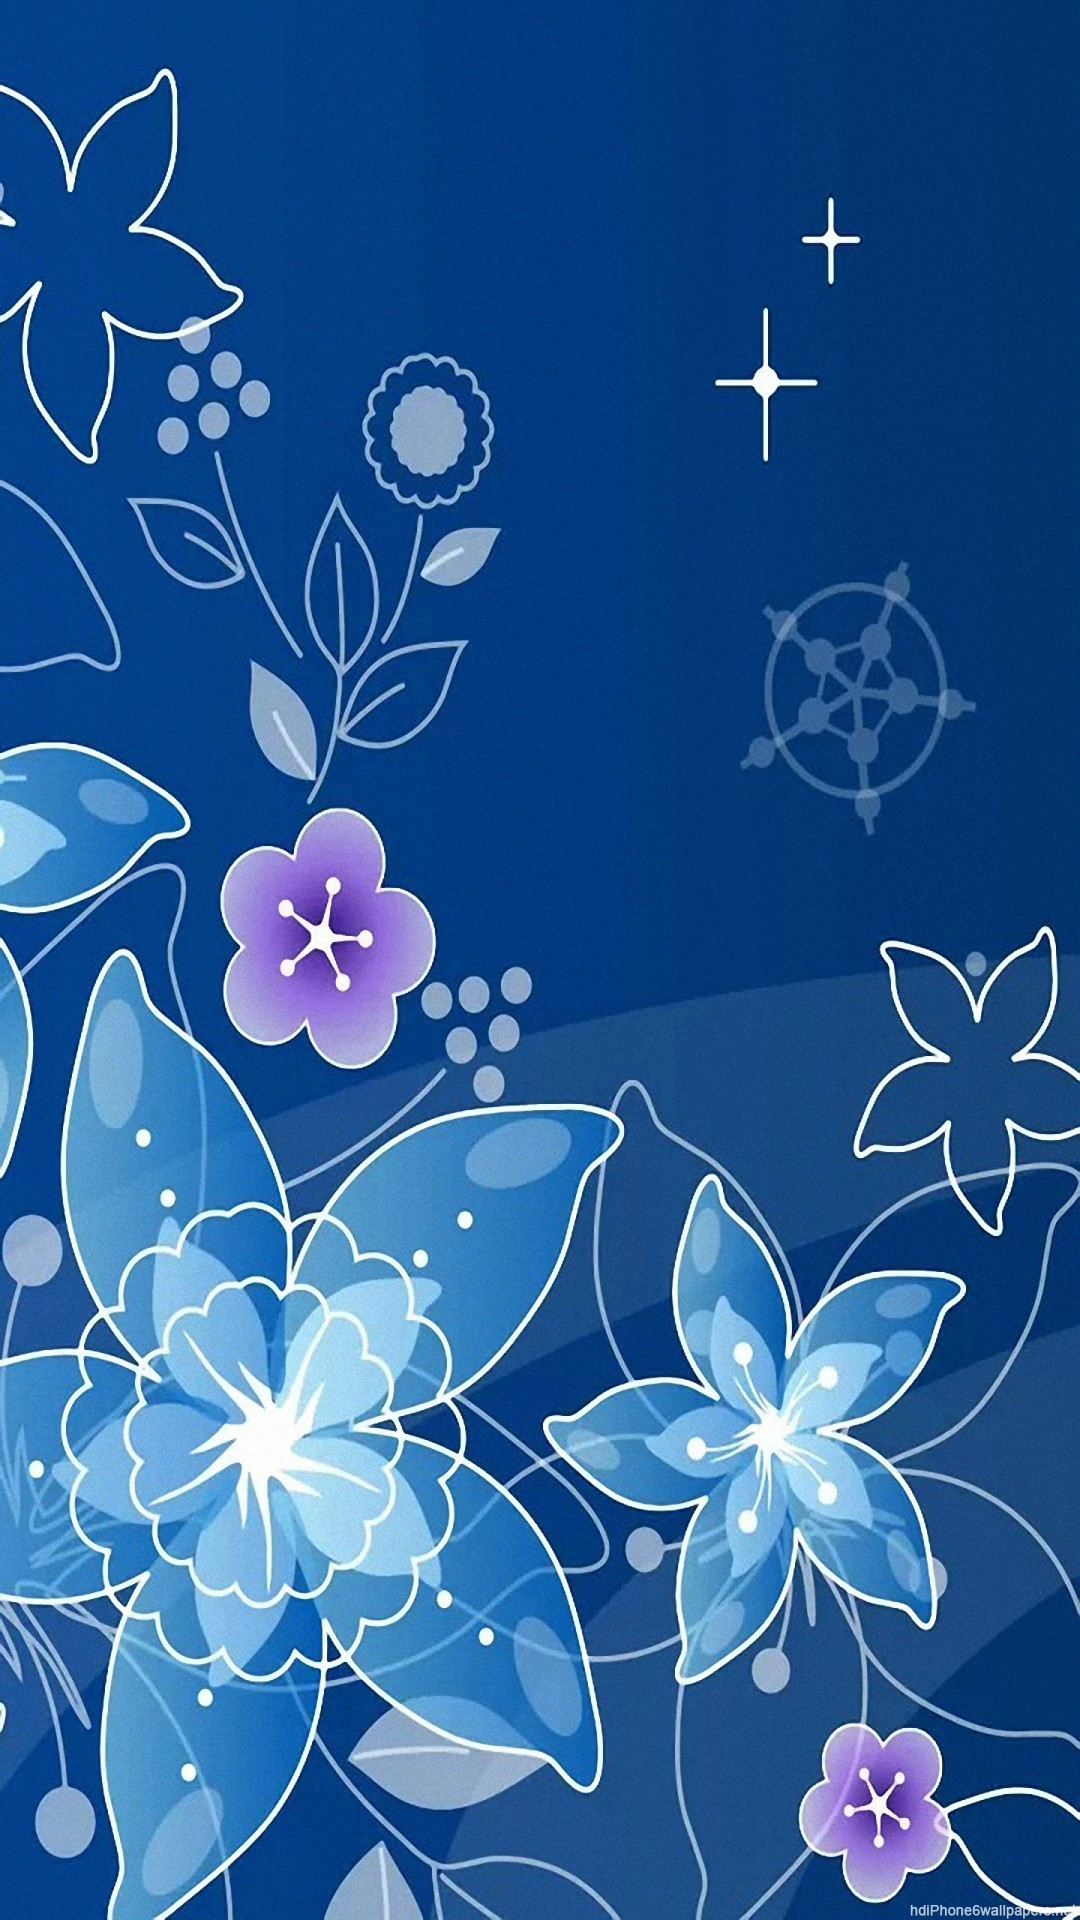 1080x1920 flowers digital pattern iphone 6 wallpapers